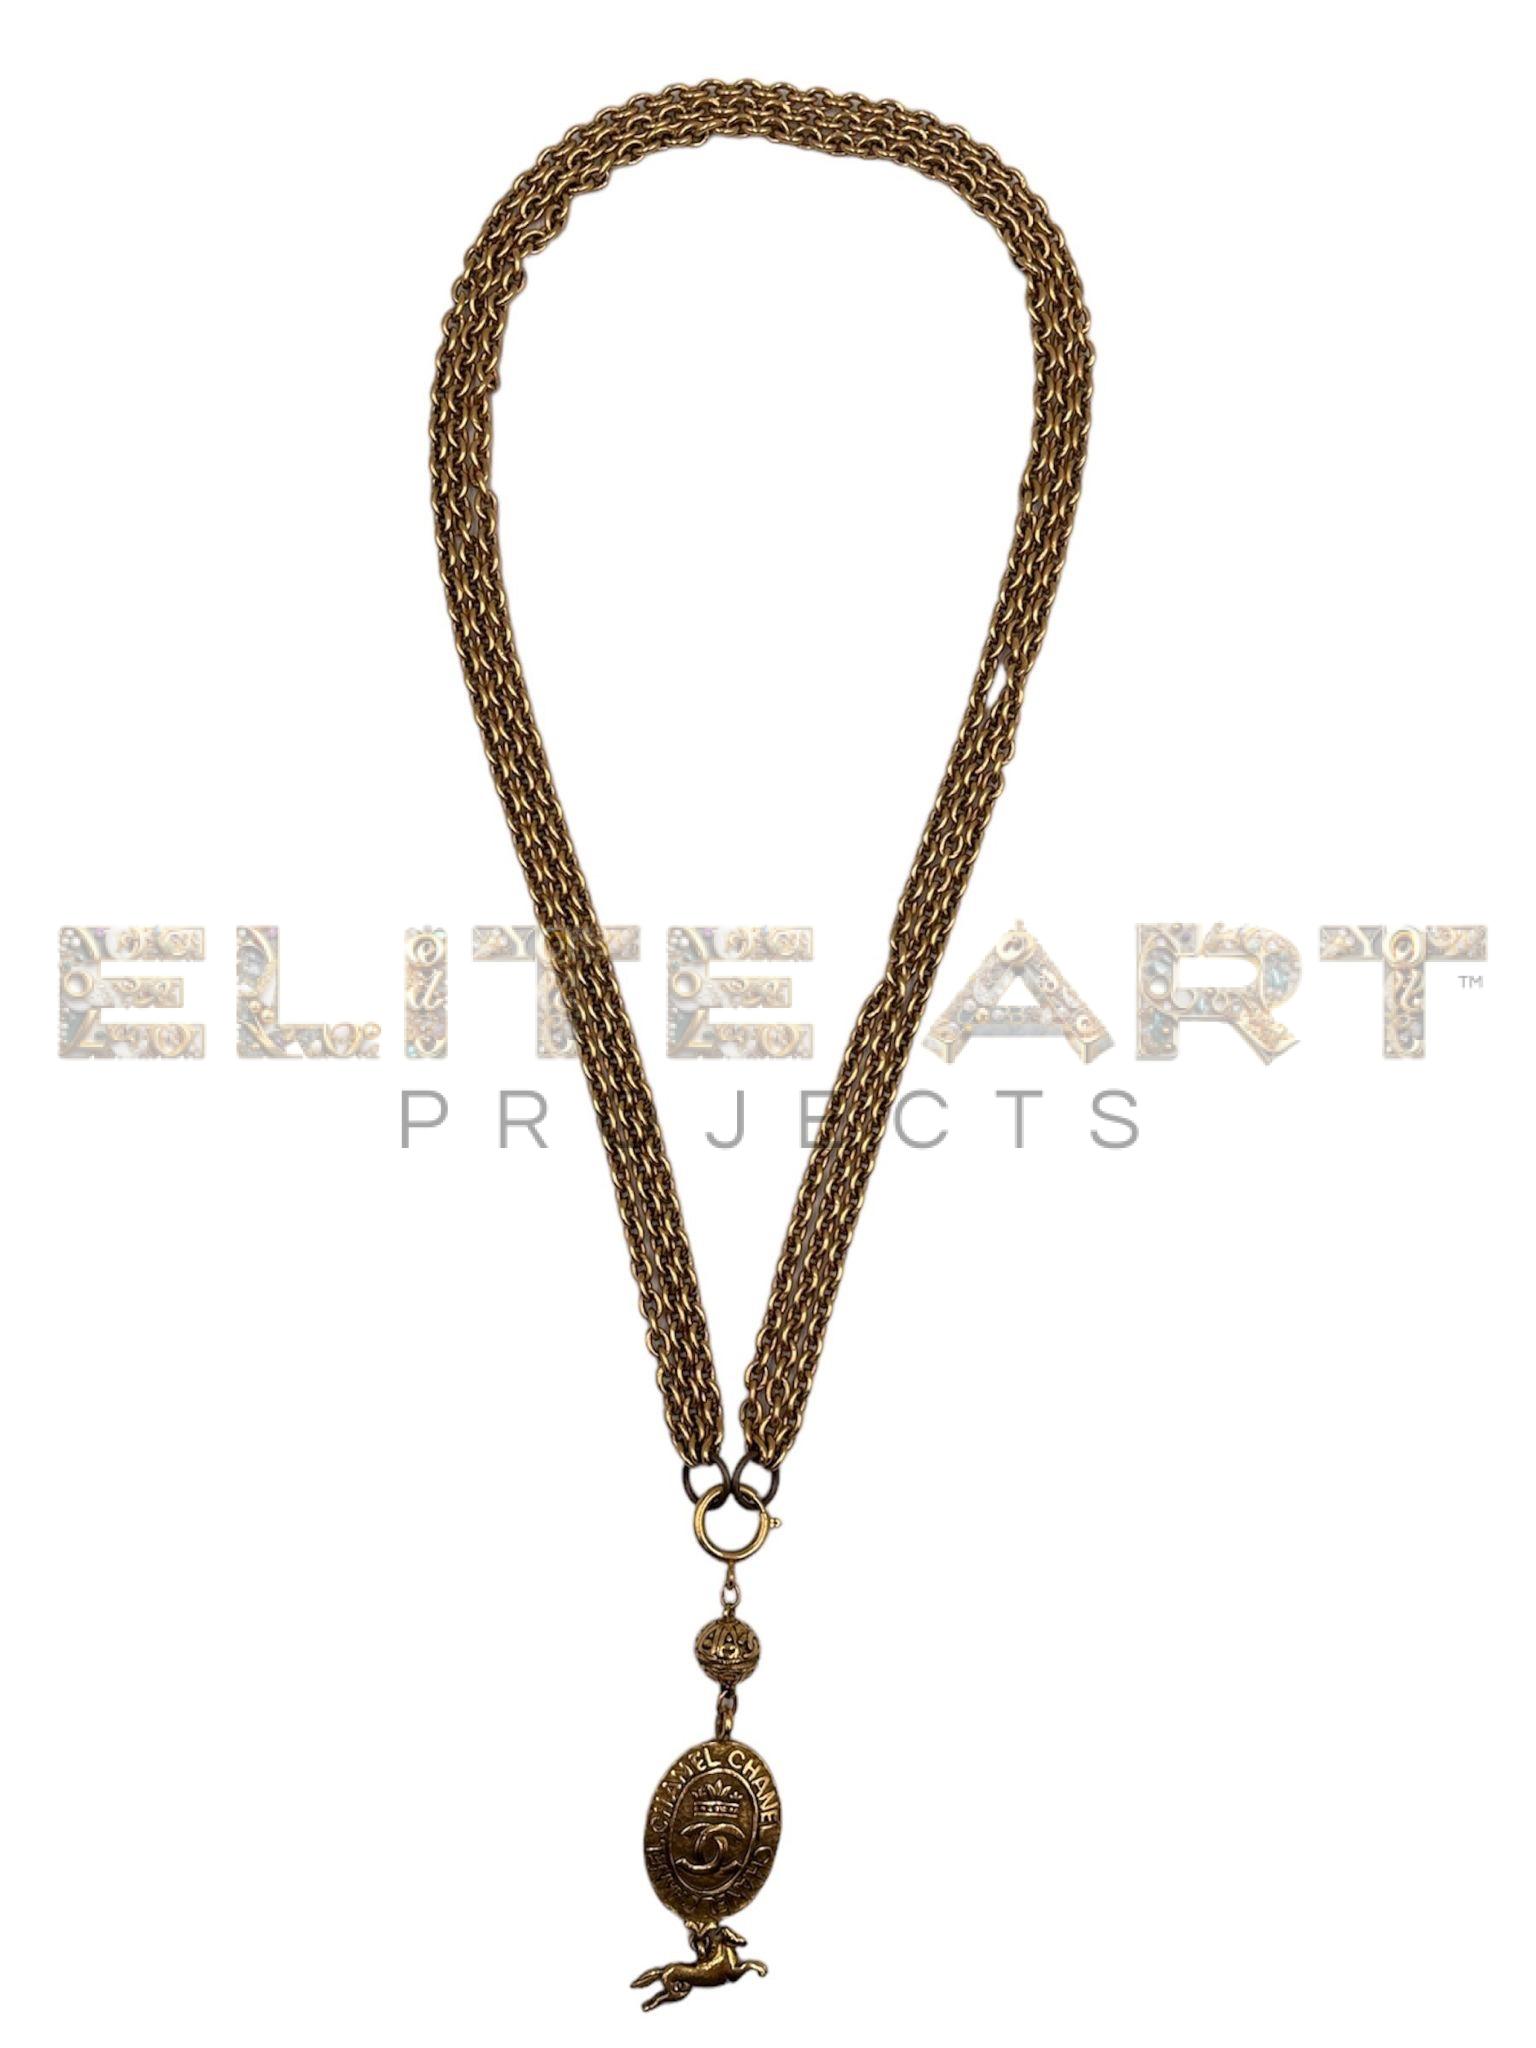 Chanel,necklace,gold-plated metal,narrow-link chains,removable pendant,decorative sphere,"CHANEL" logo medallion,"CC" logo pendant,83 cm length